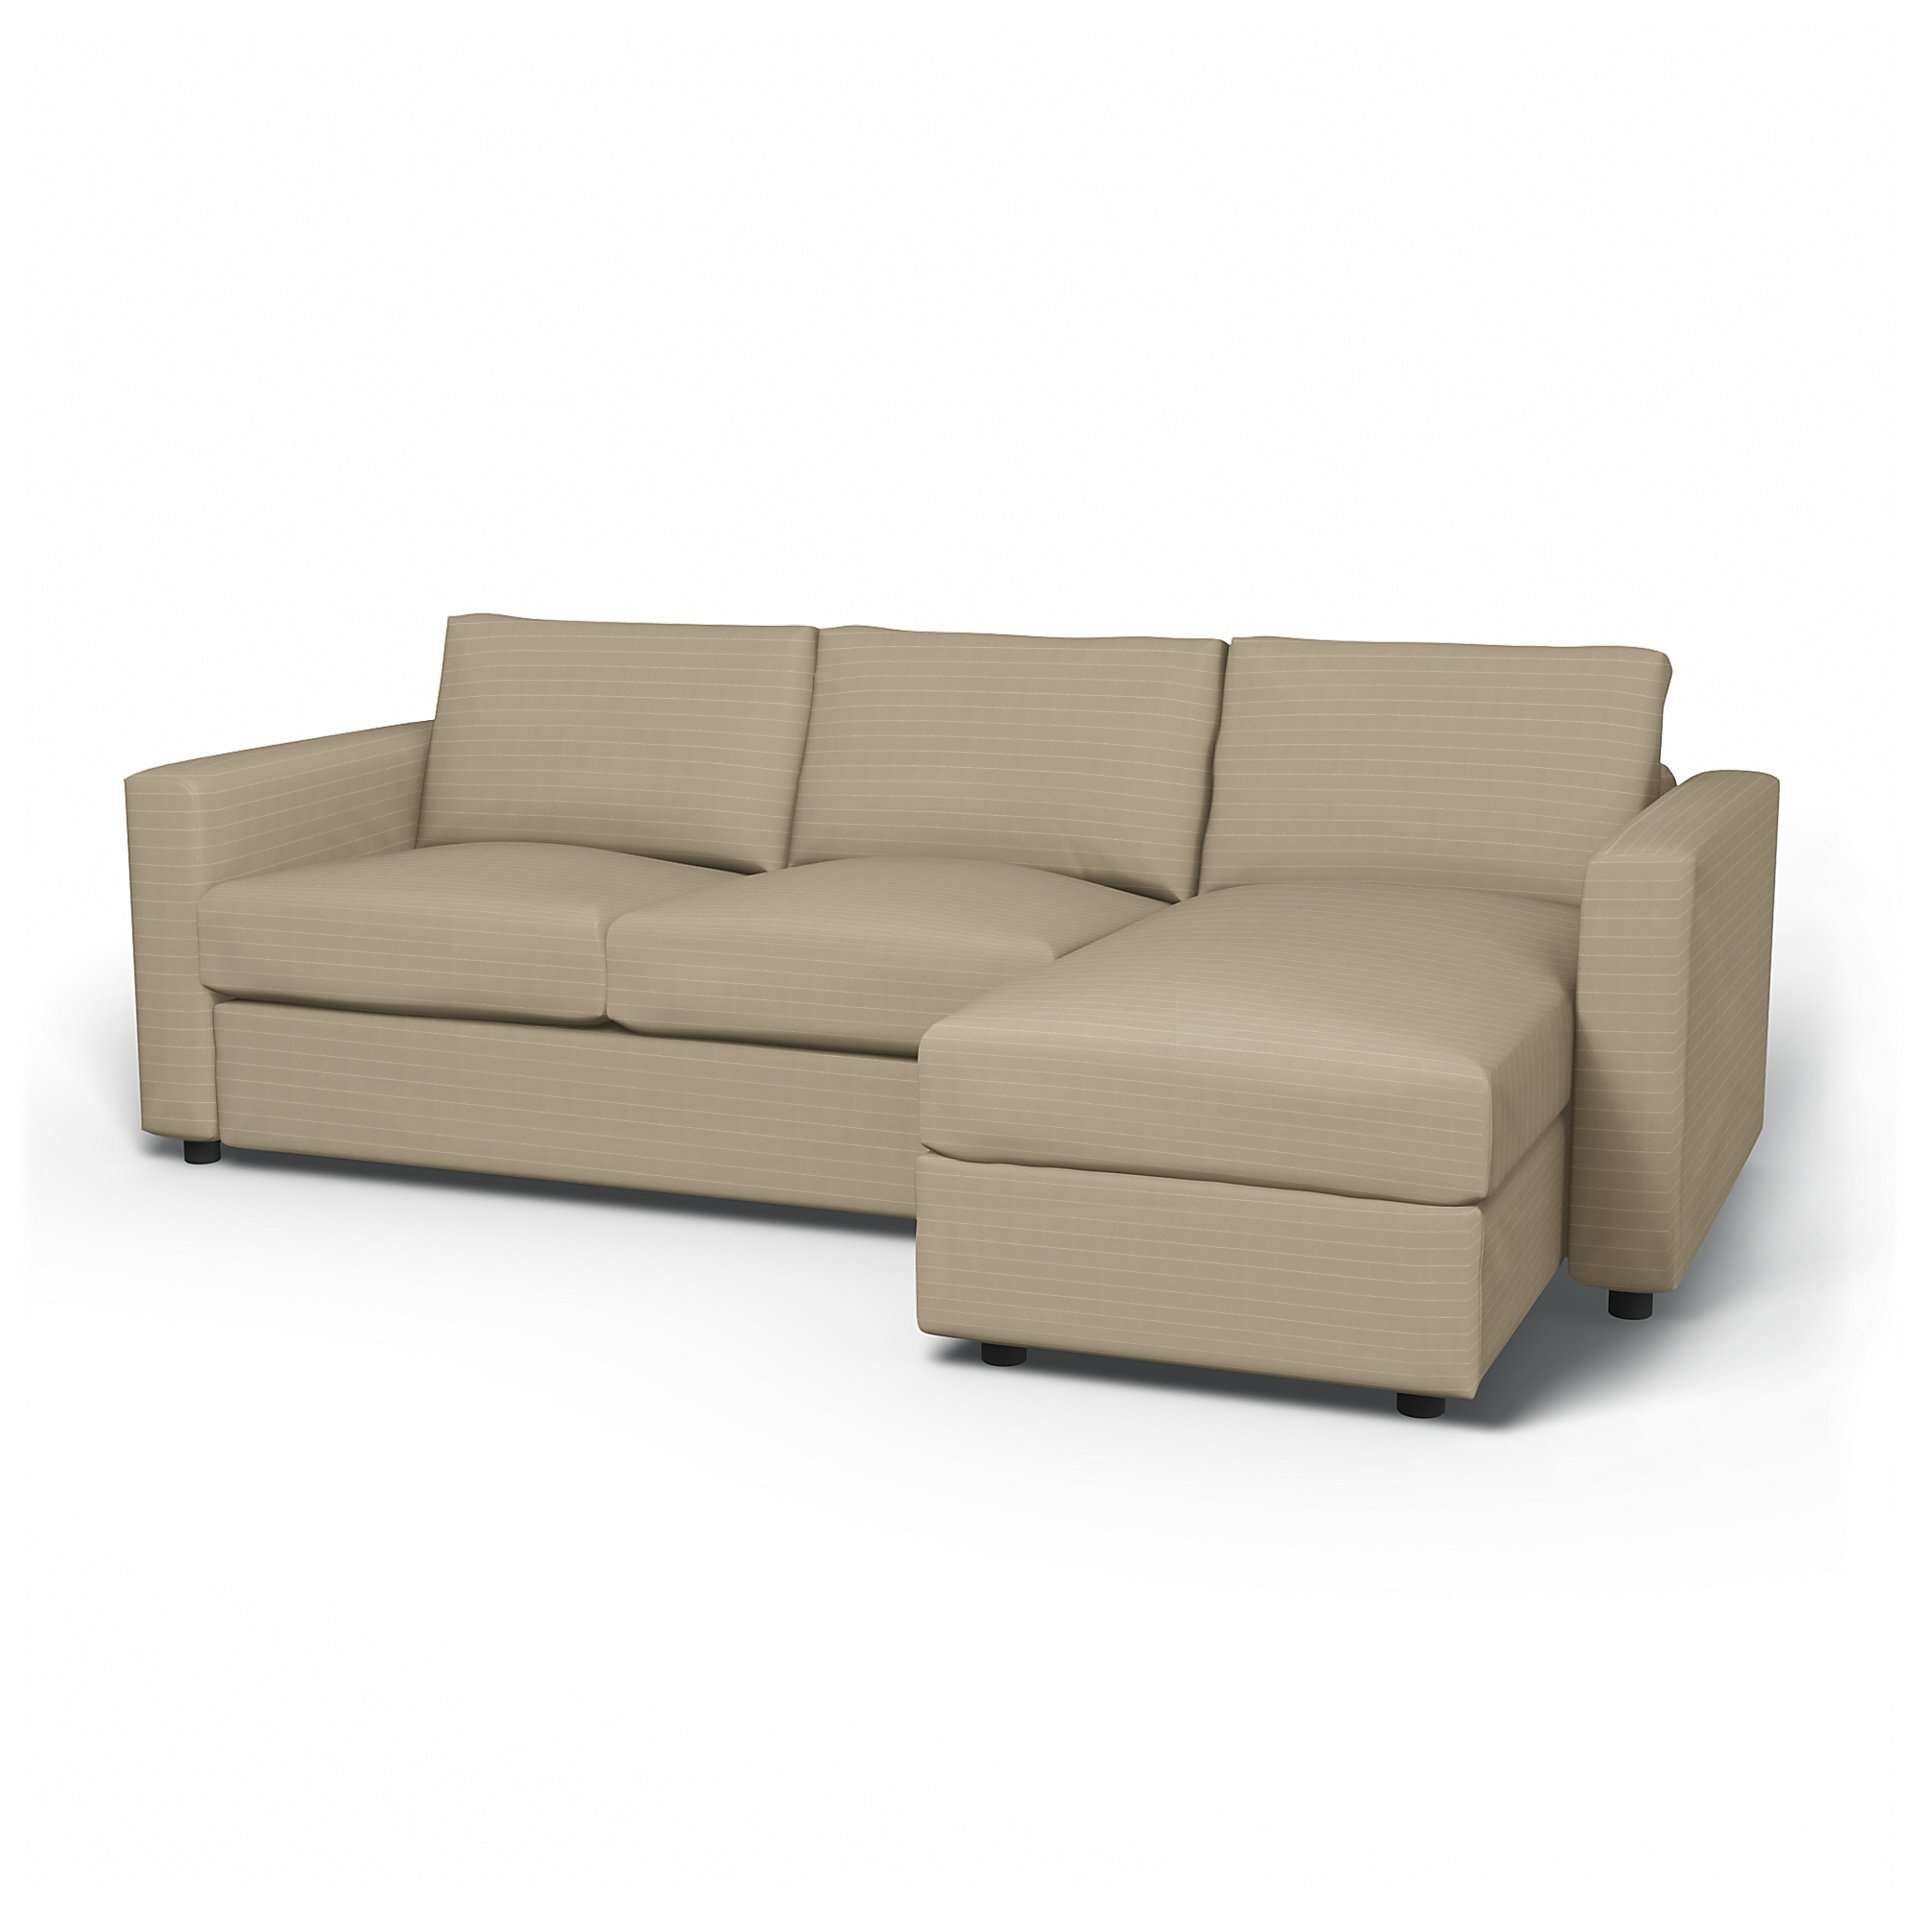 IKEA - Vimle 2 Seater Sofa with Chaise Cover, Oyster, Velvet - Bemz